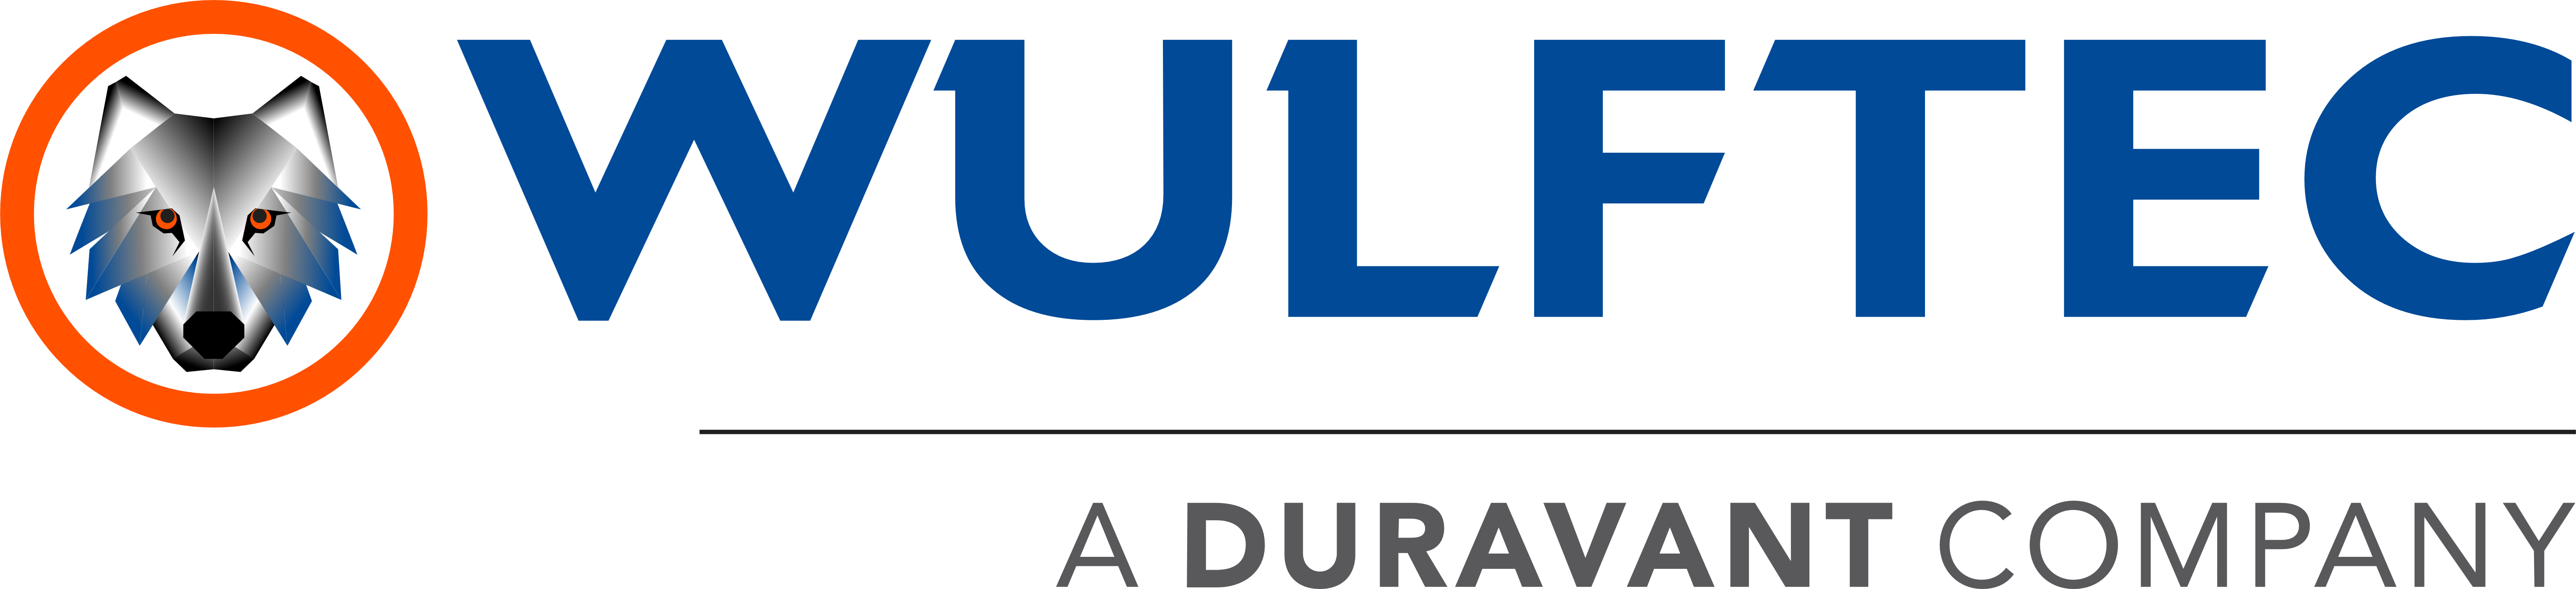 Wulftec-Logo